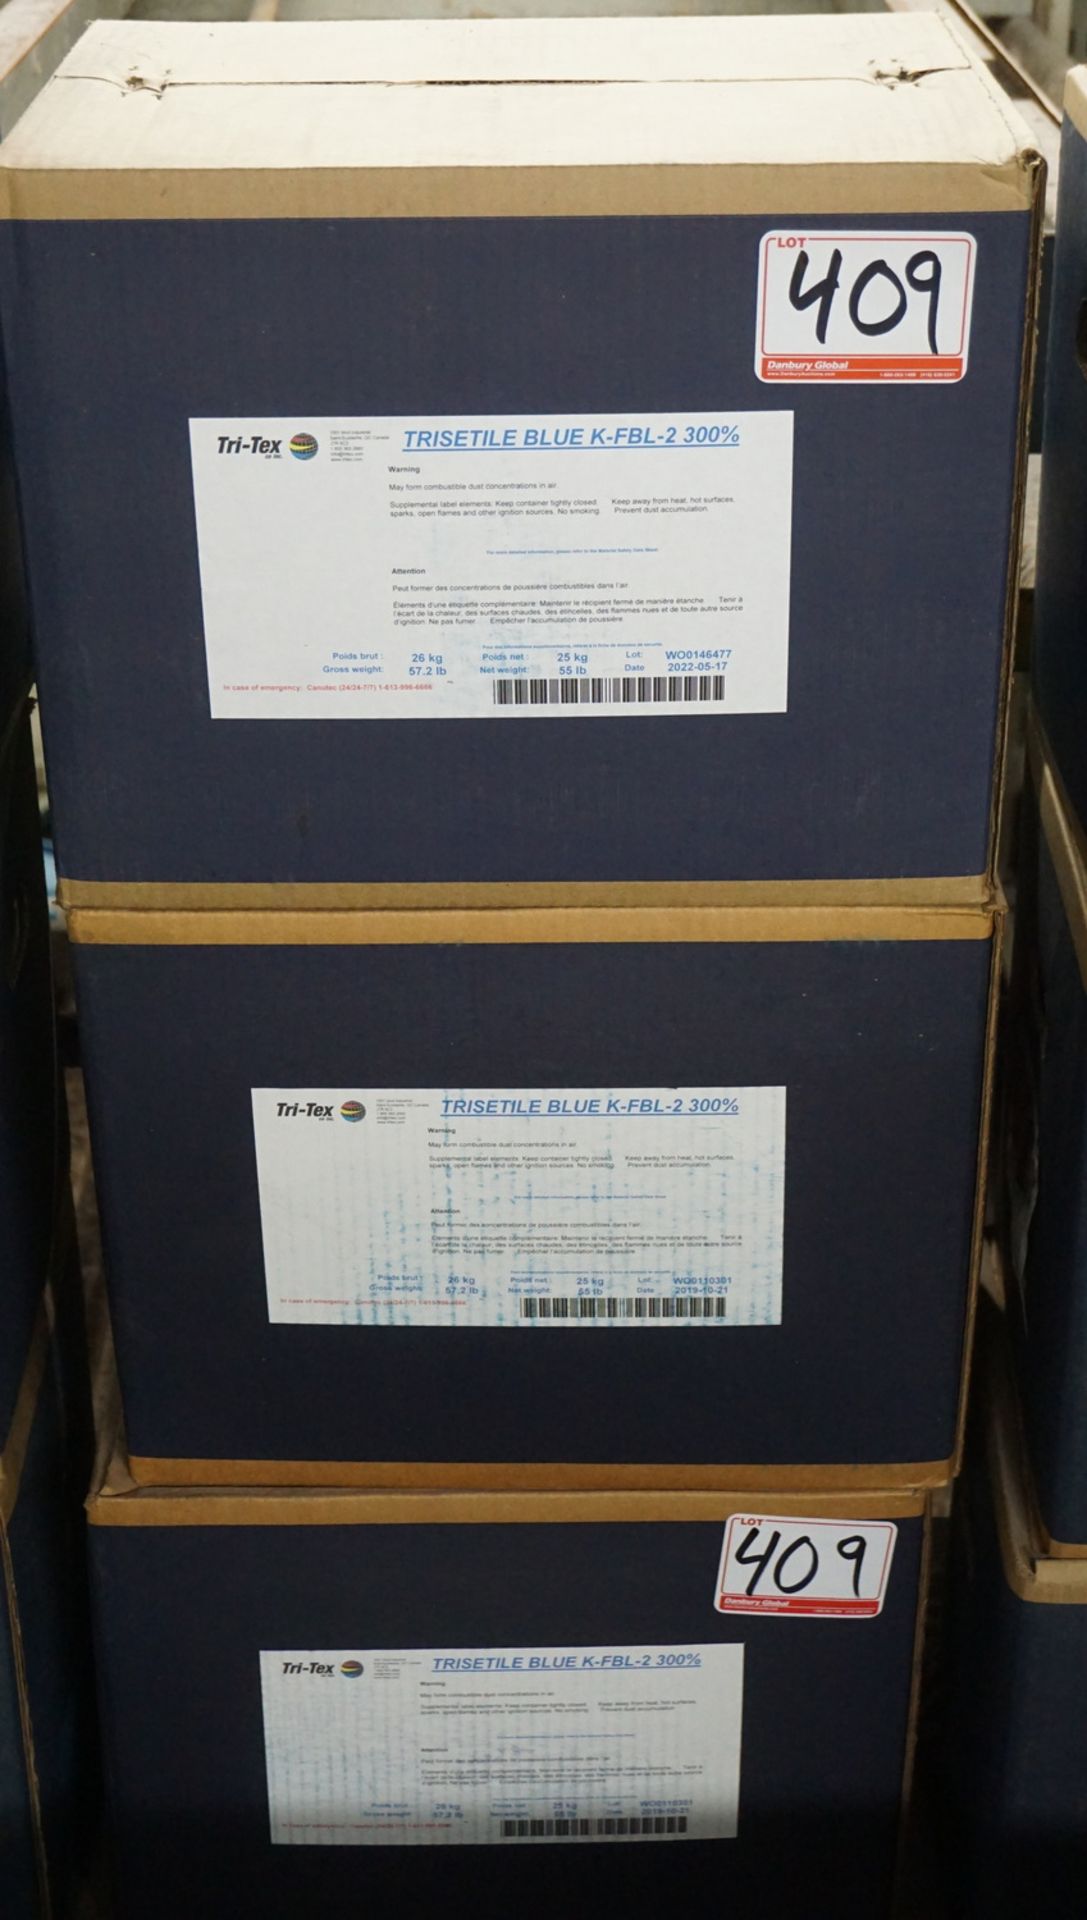 BOXES - ASSTD TRI-TEX TRISELITE BLUE RBL, F-2GS, K-F-FBL-2 300%, ETC (25KG/BOX) - Image 3 of 4